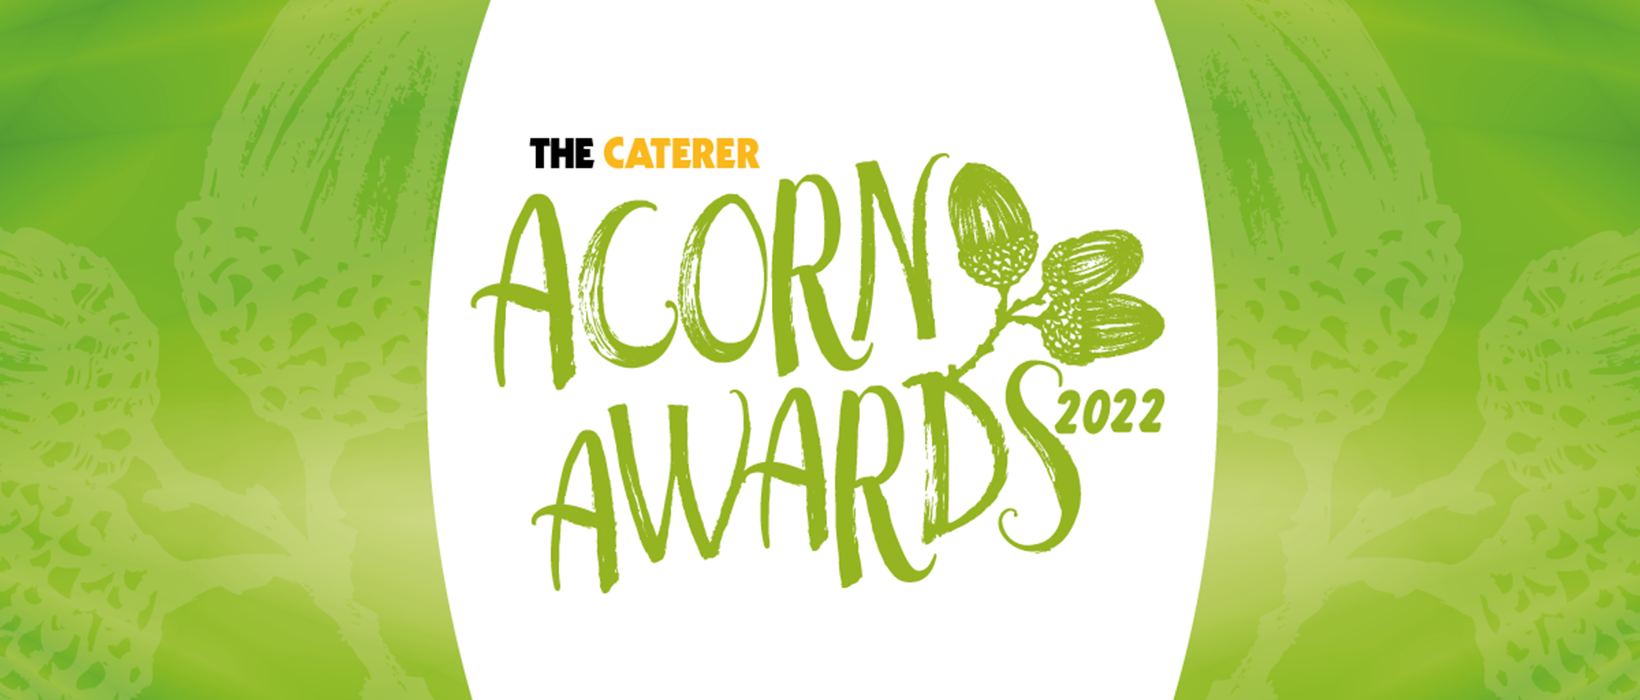 Acorn Awards 2022 open for entries